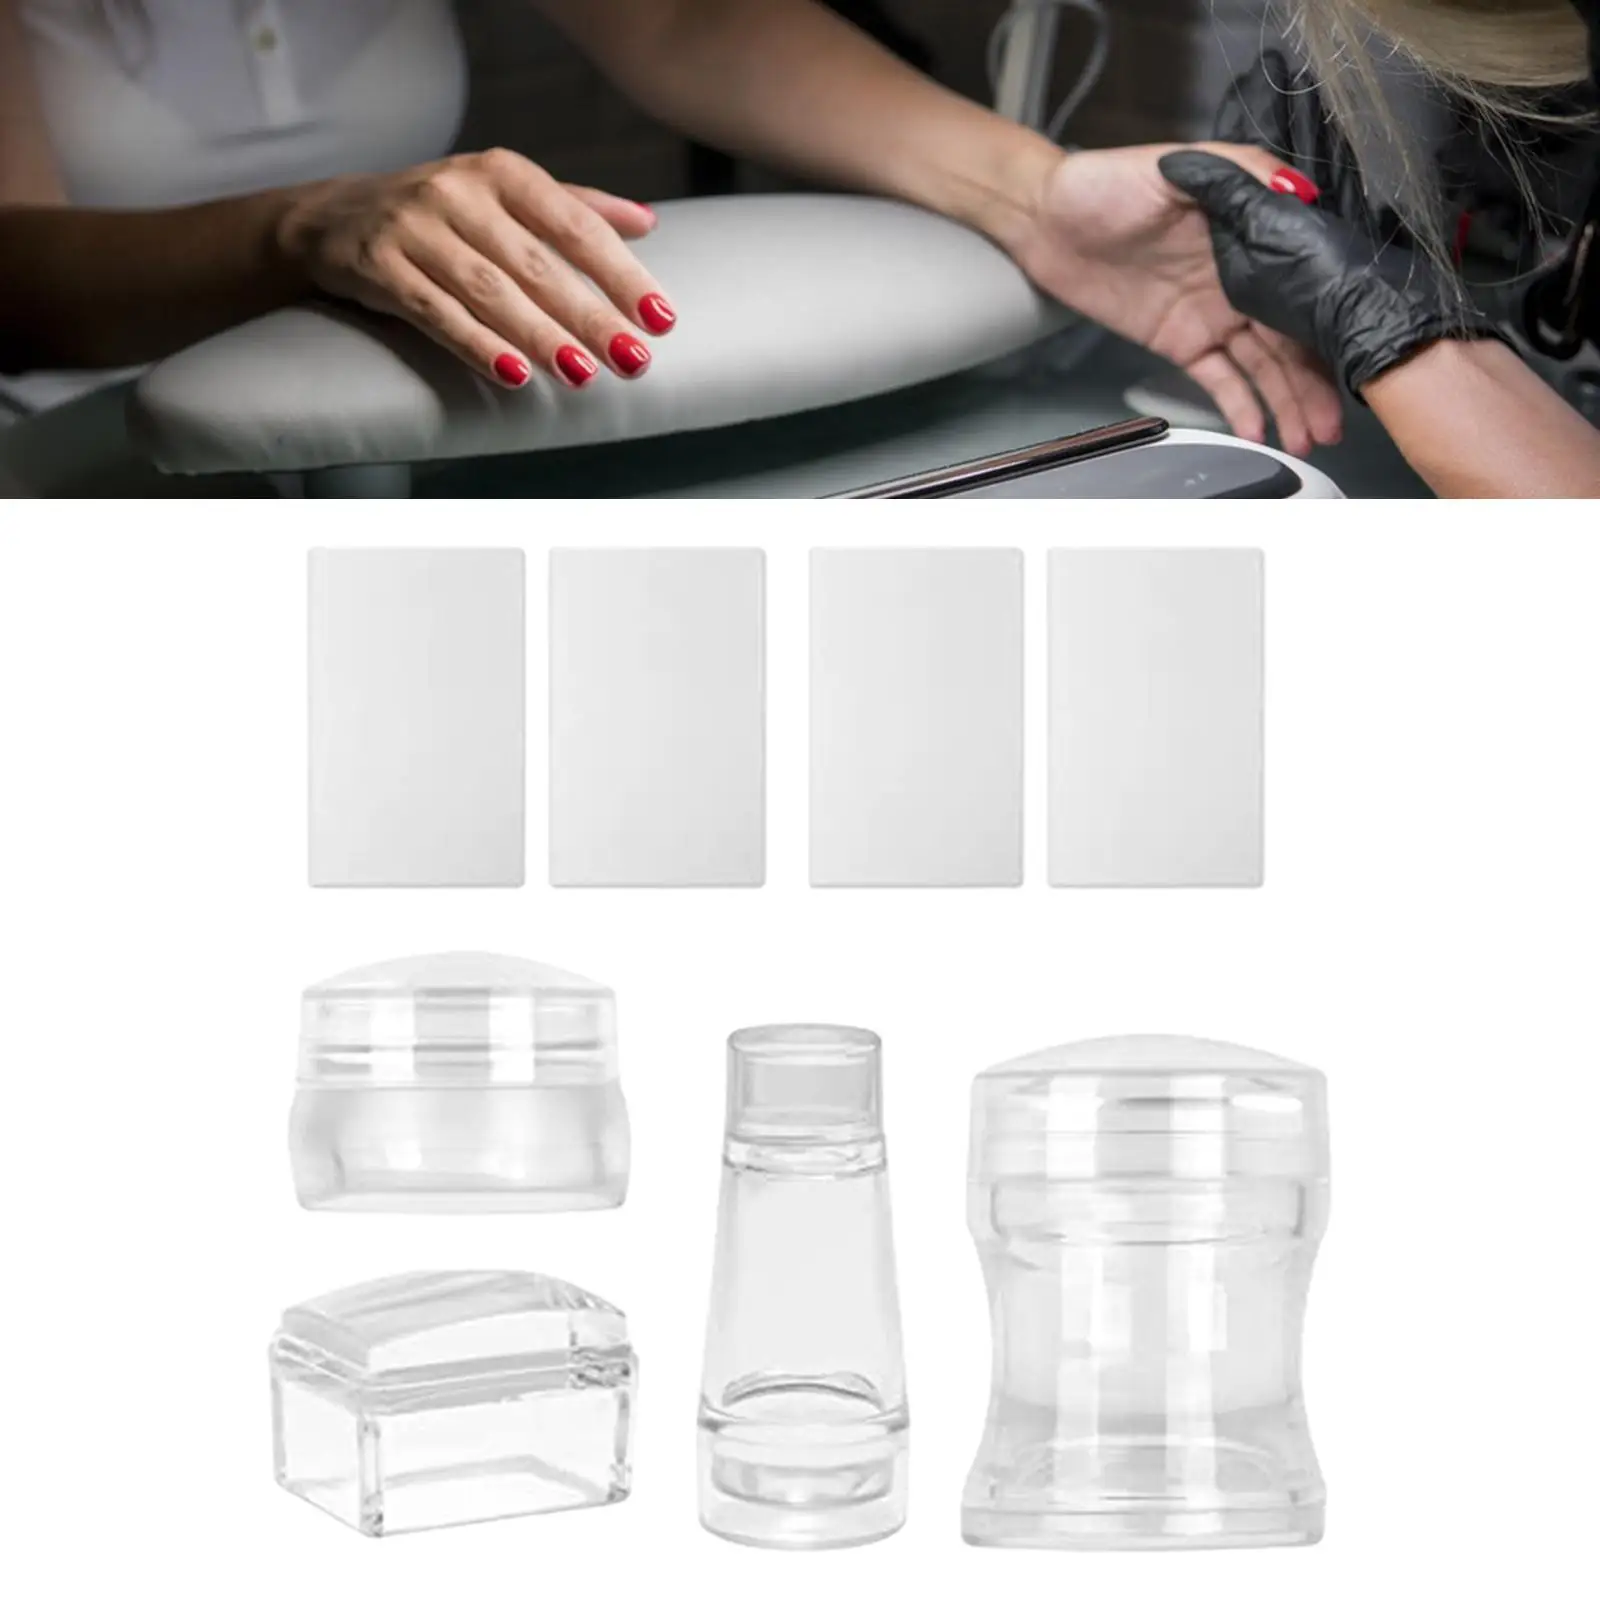 8Pcs Transparent Nail Art Stamper Scraper Set Decoration for Manicure DIY